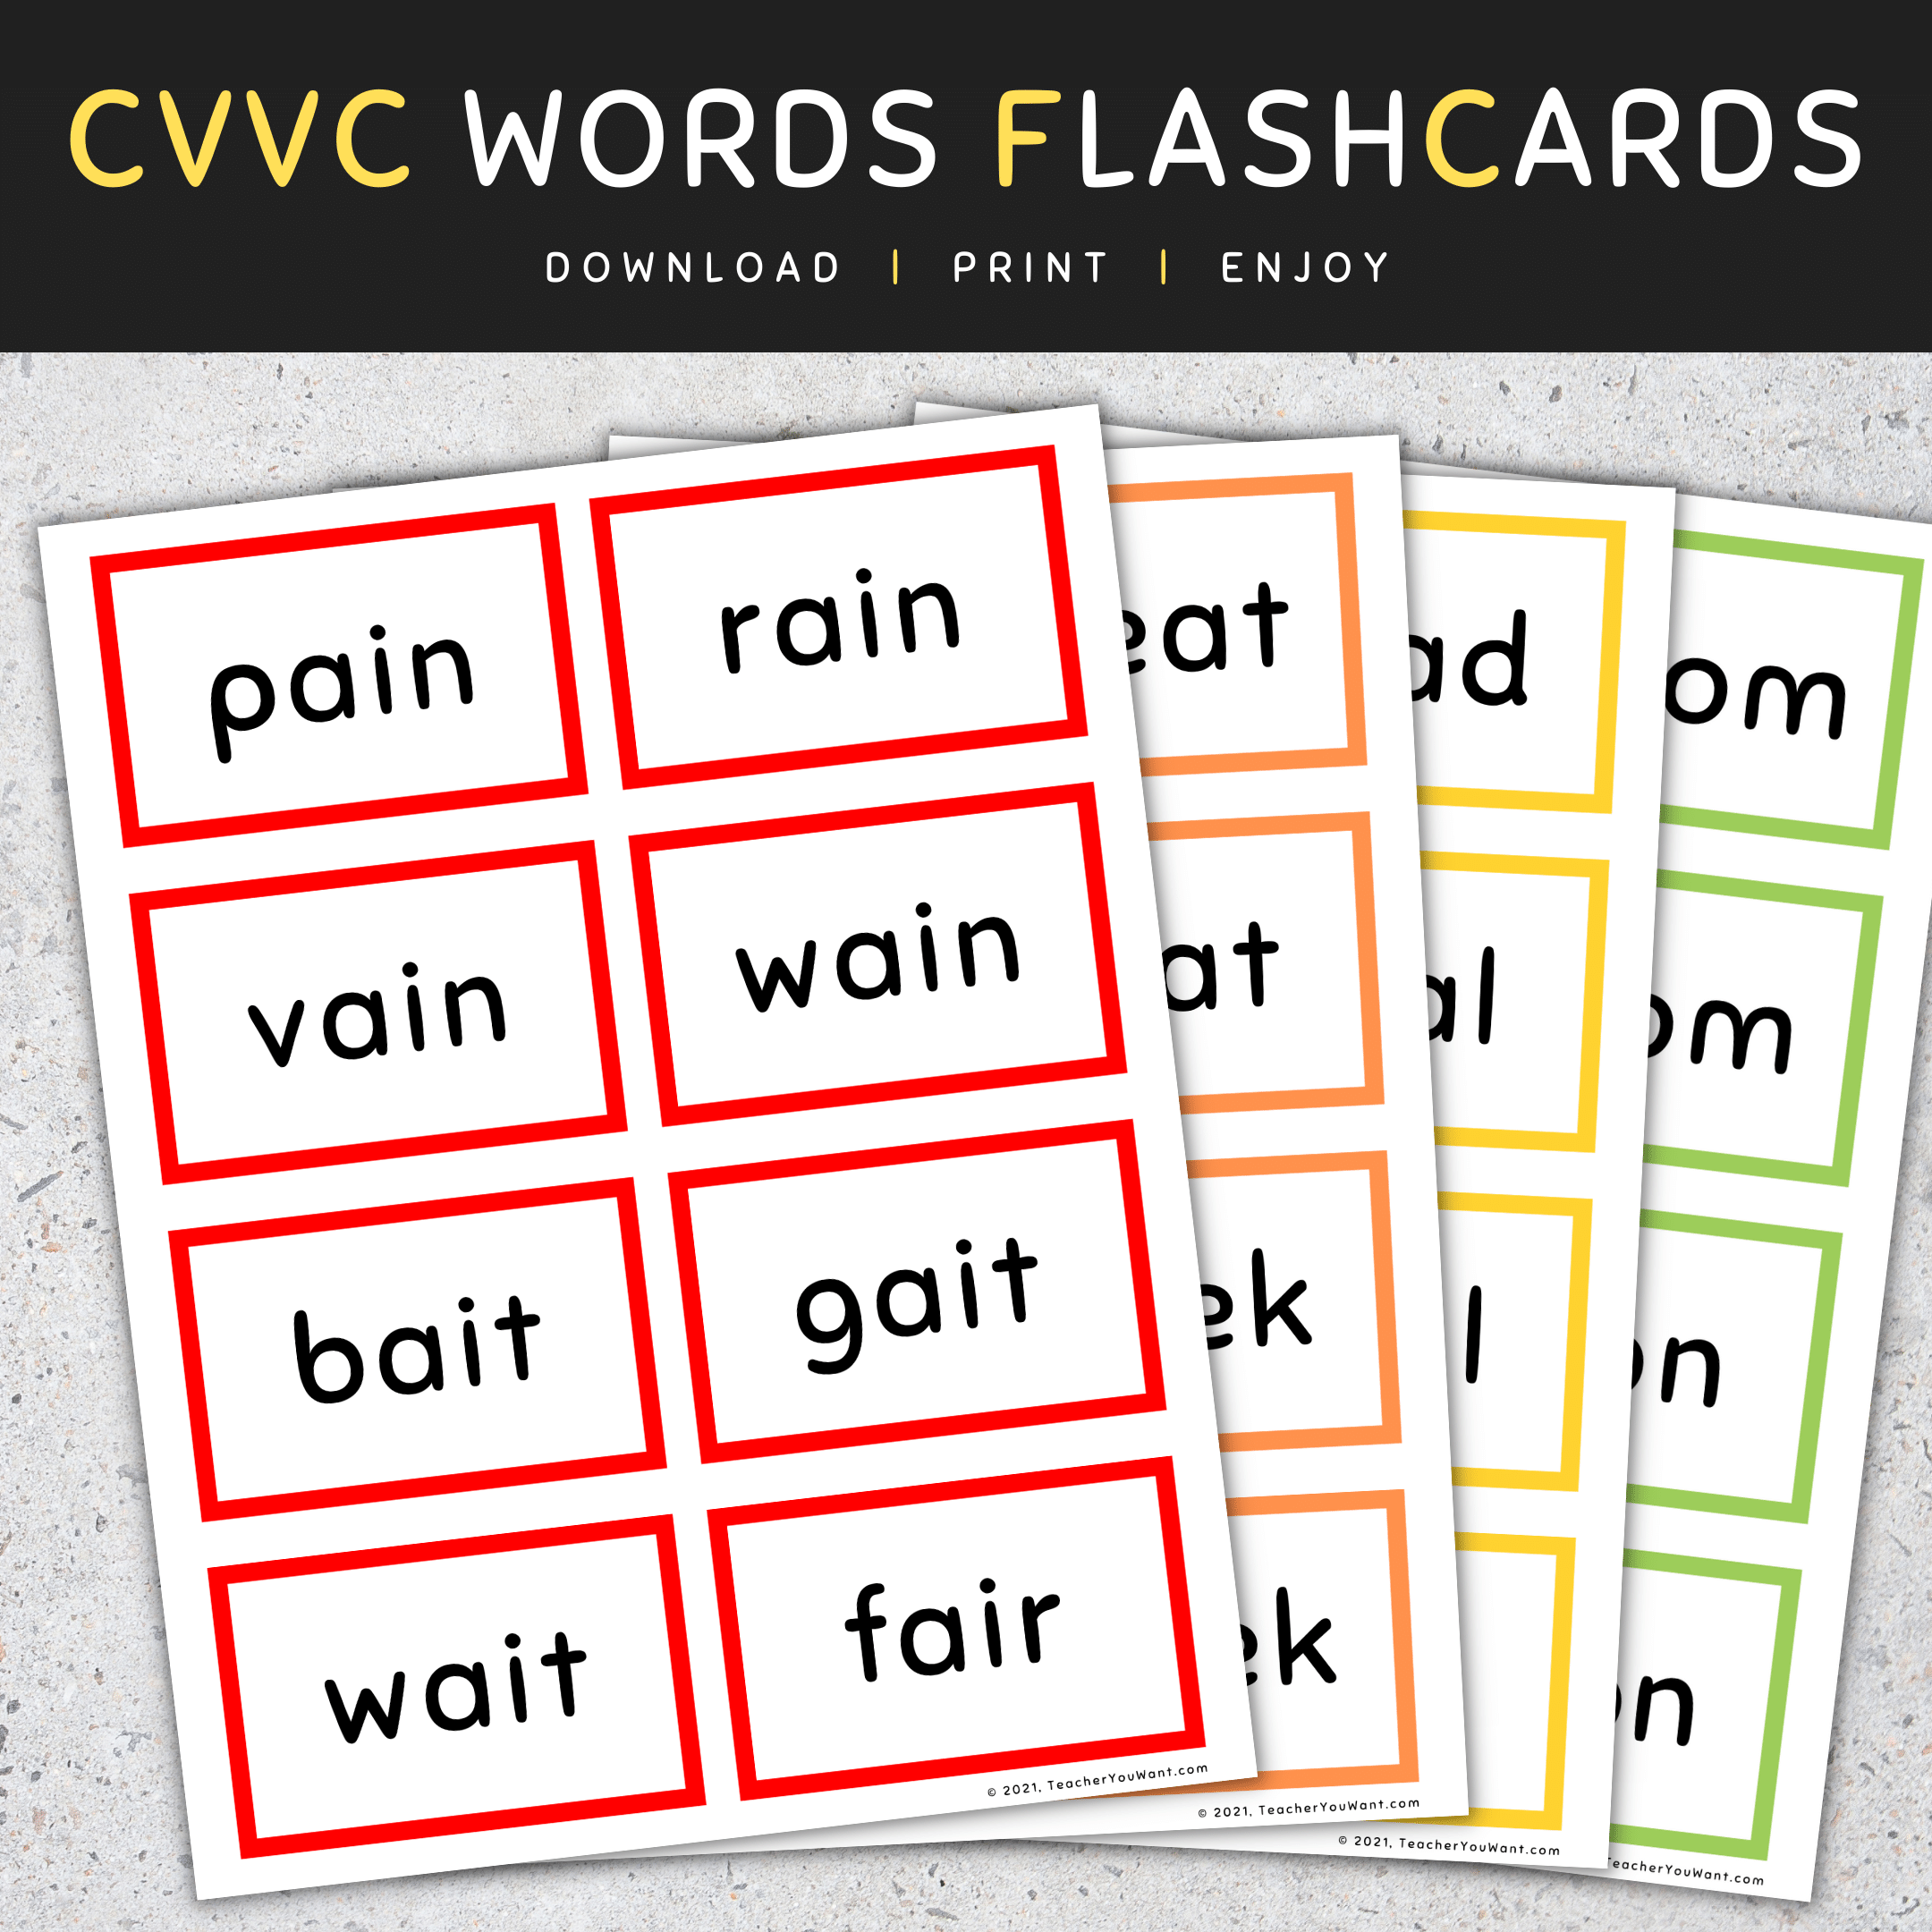 Cvvc words flash cards long vowels a e o u cvvc words list set made by teachers